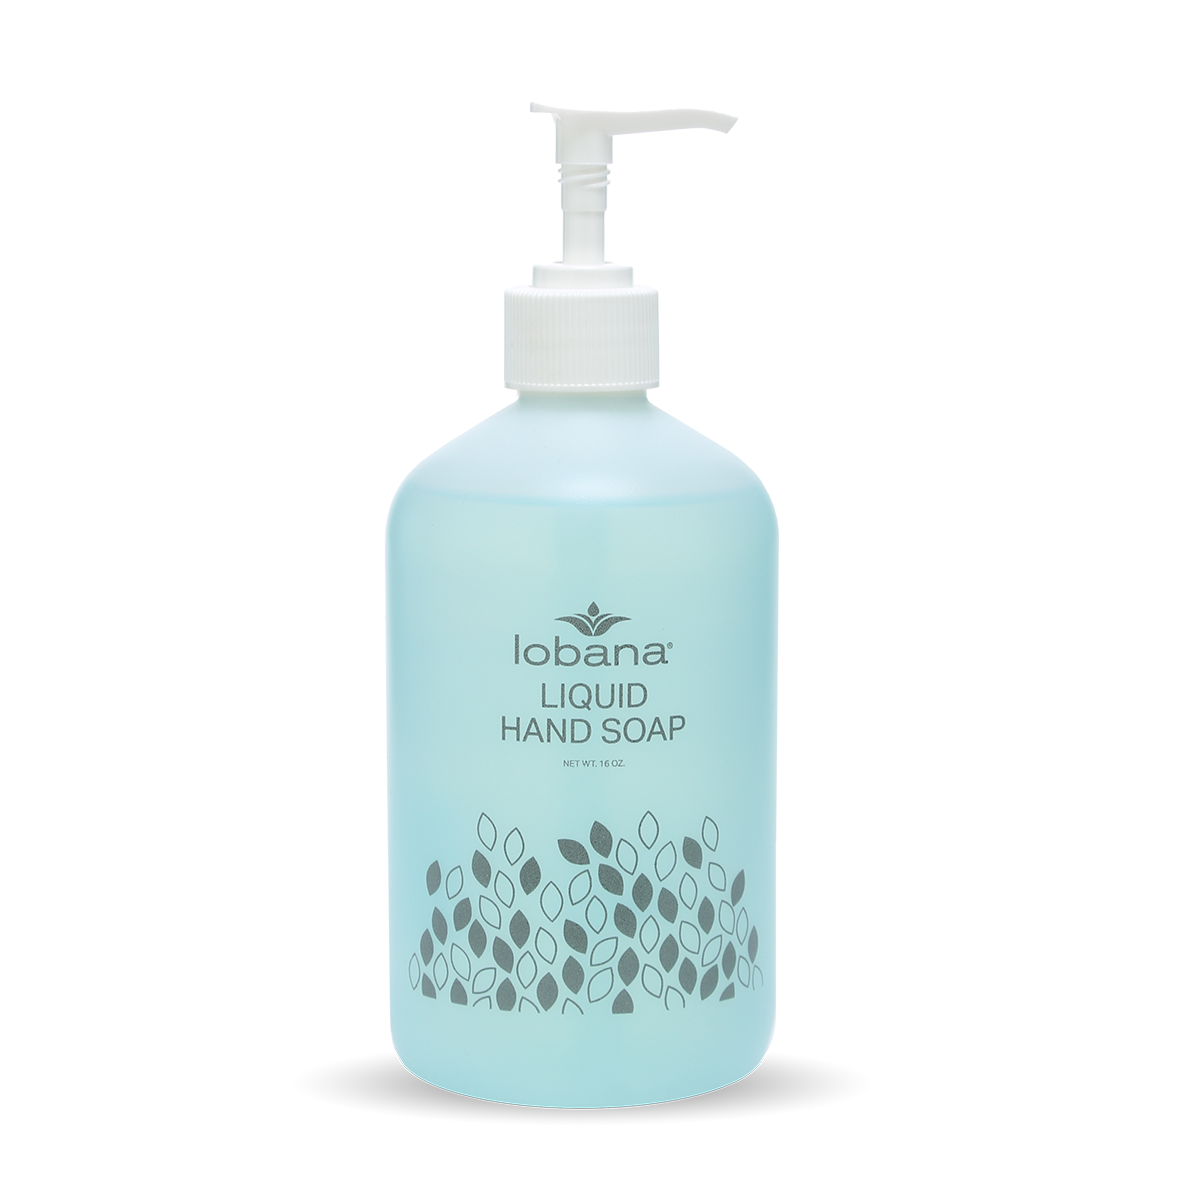 Lobana Liquid Hand Soap is a gentle hand soap.